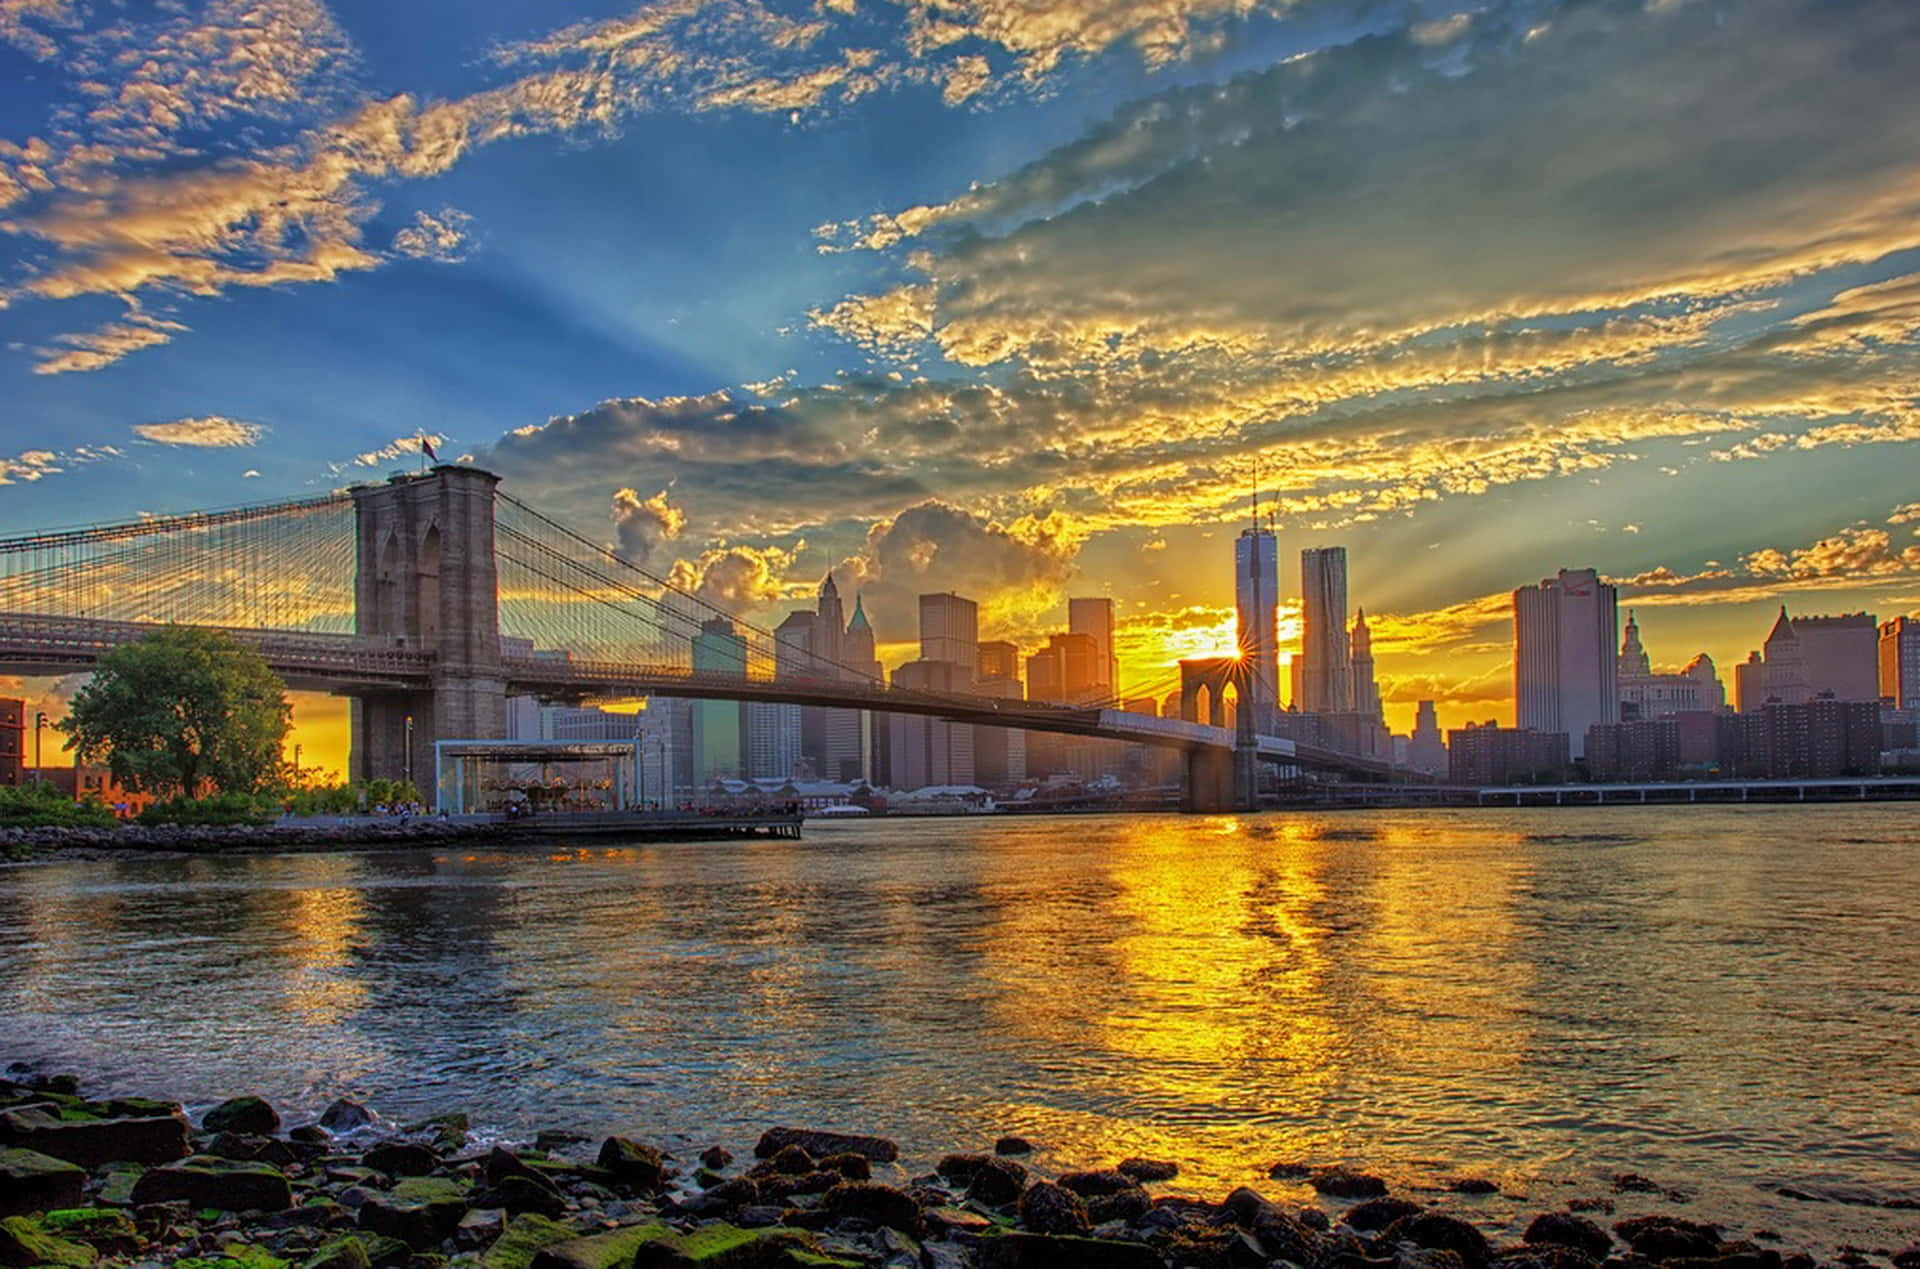 Enjoy a stunning view of the New York City skyline